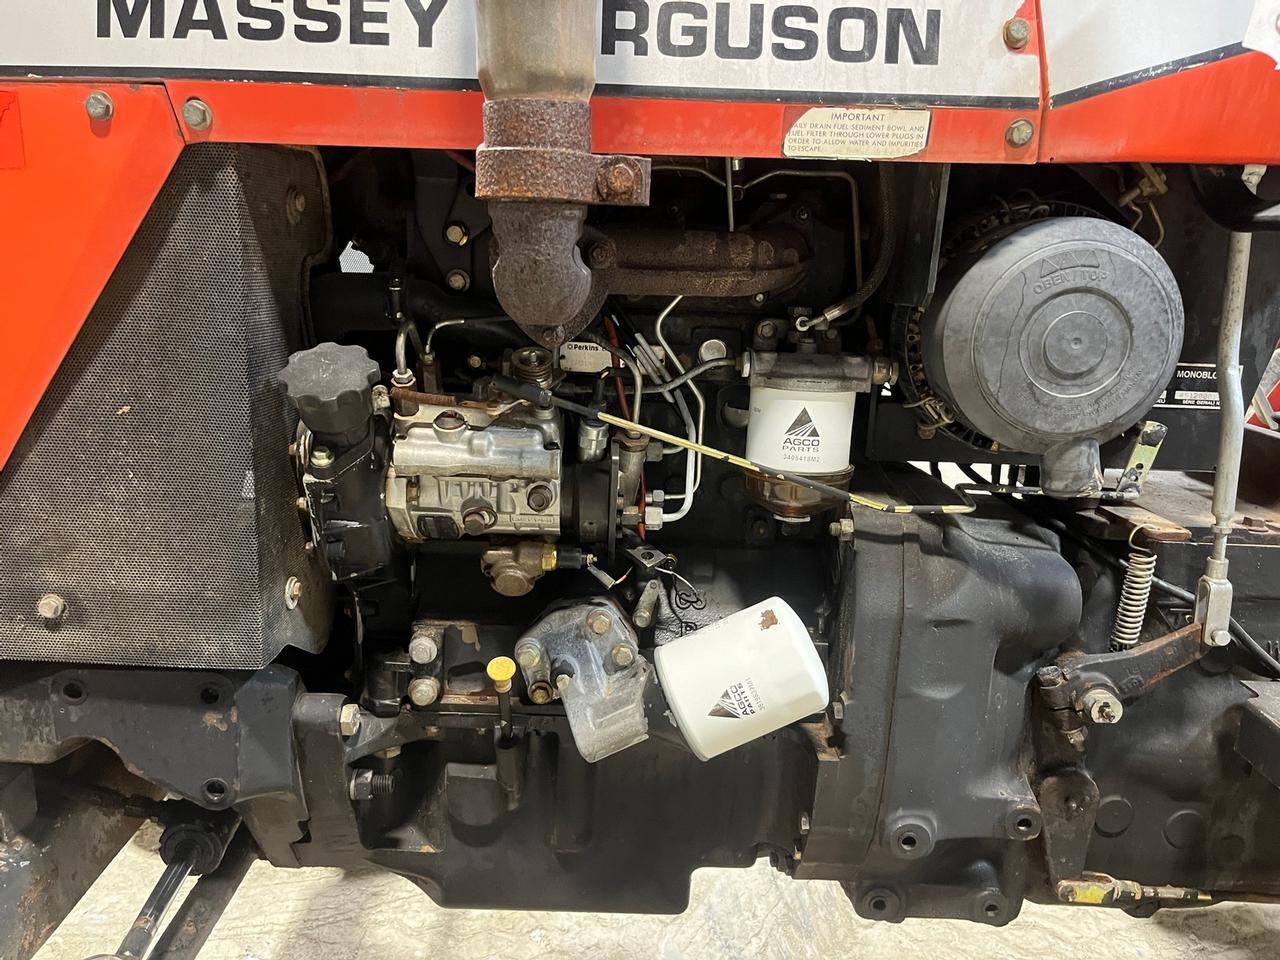 Massey Ferguson 451 Tractor